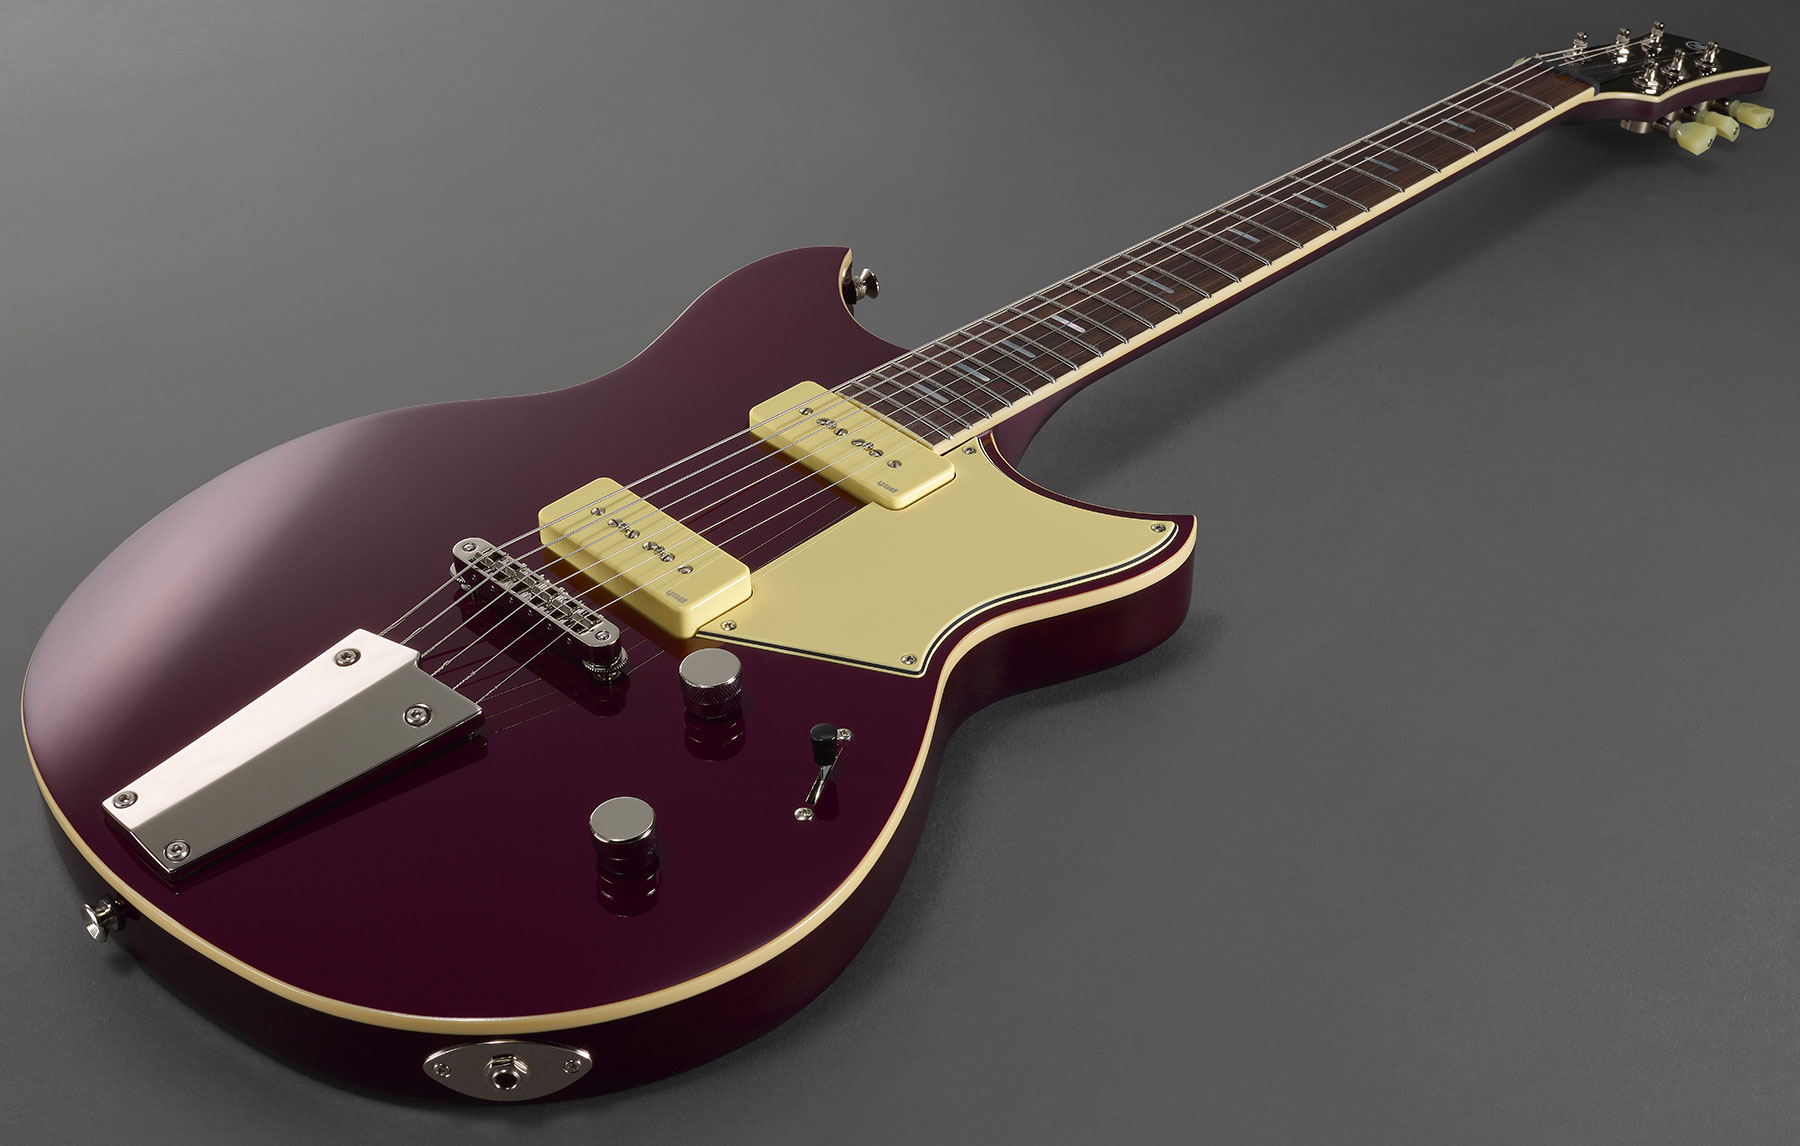 Yamaha Rss02t Revstar Standard 2p90 Ht Rw - Hot Merlot - Double cut electric guitar - Variation 3